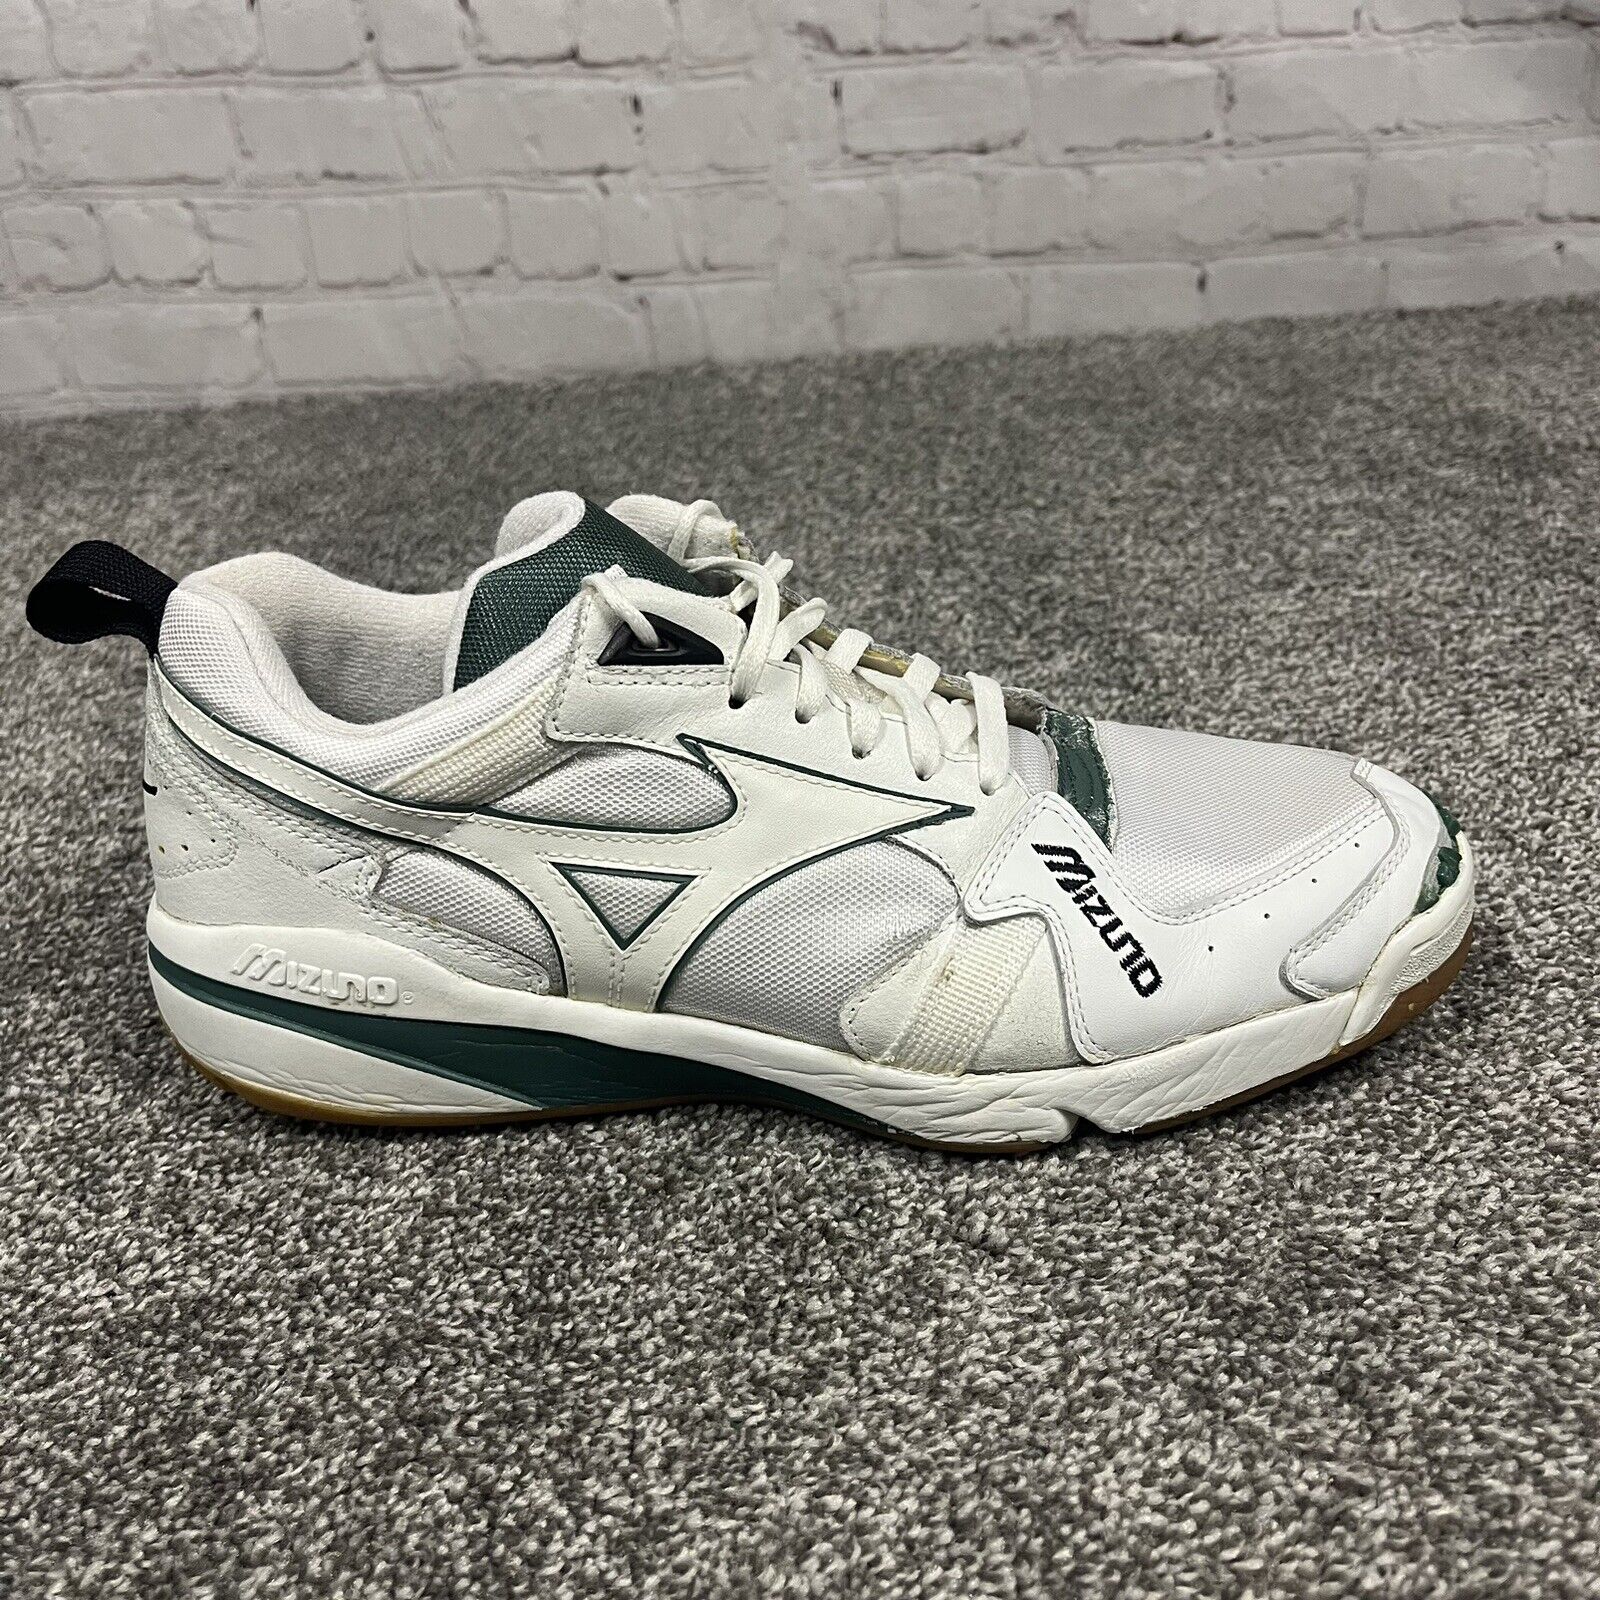 Vintage 1980s 1990s Mizuno Low Top Tennis Sneakers Shoes, White Green Sz 10